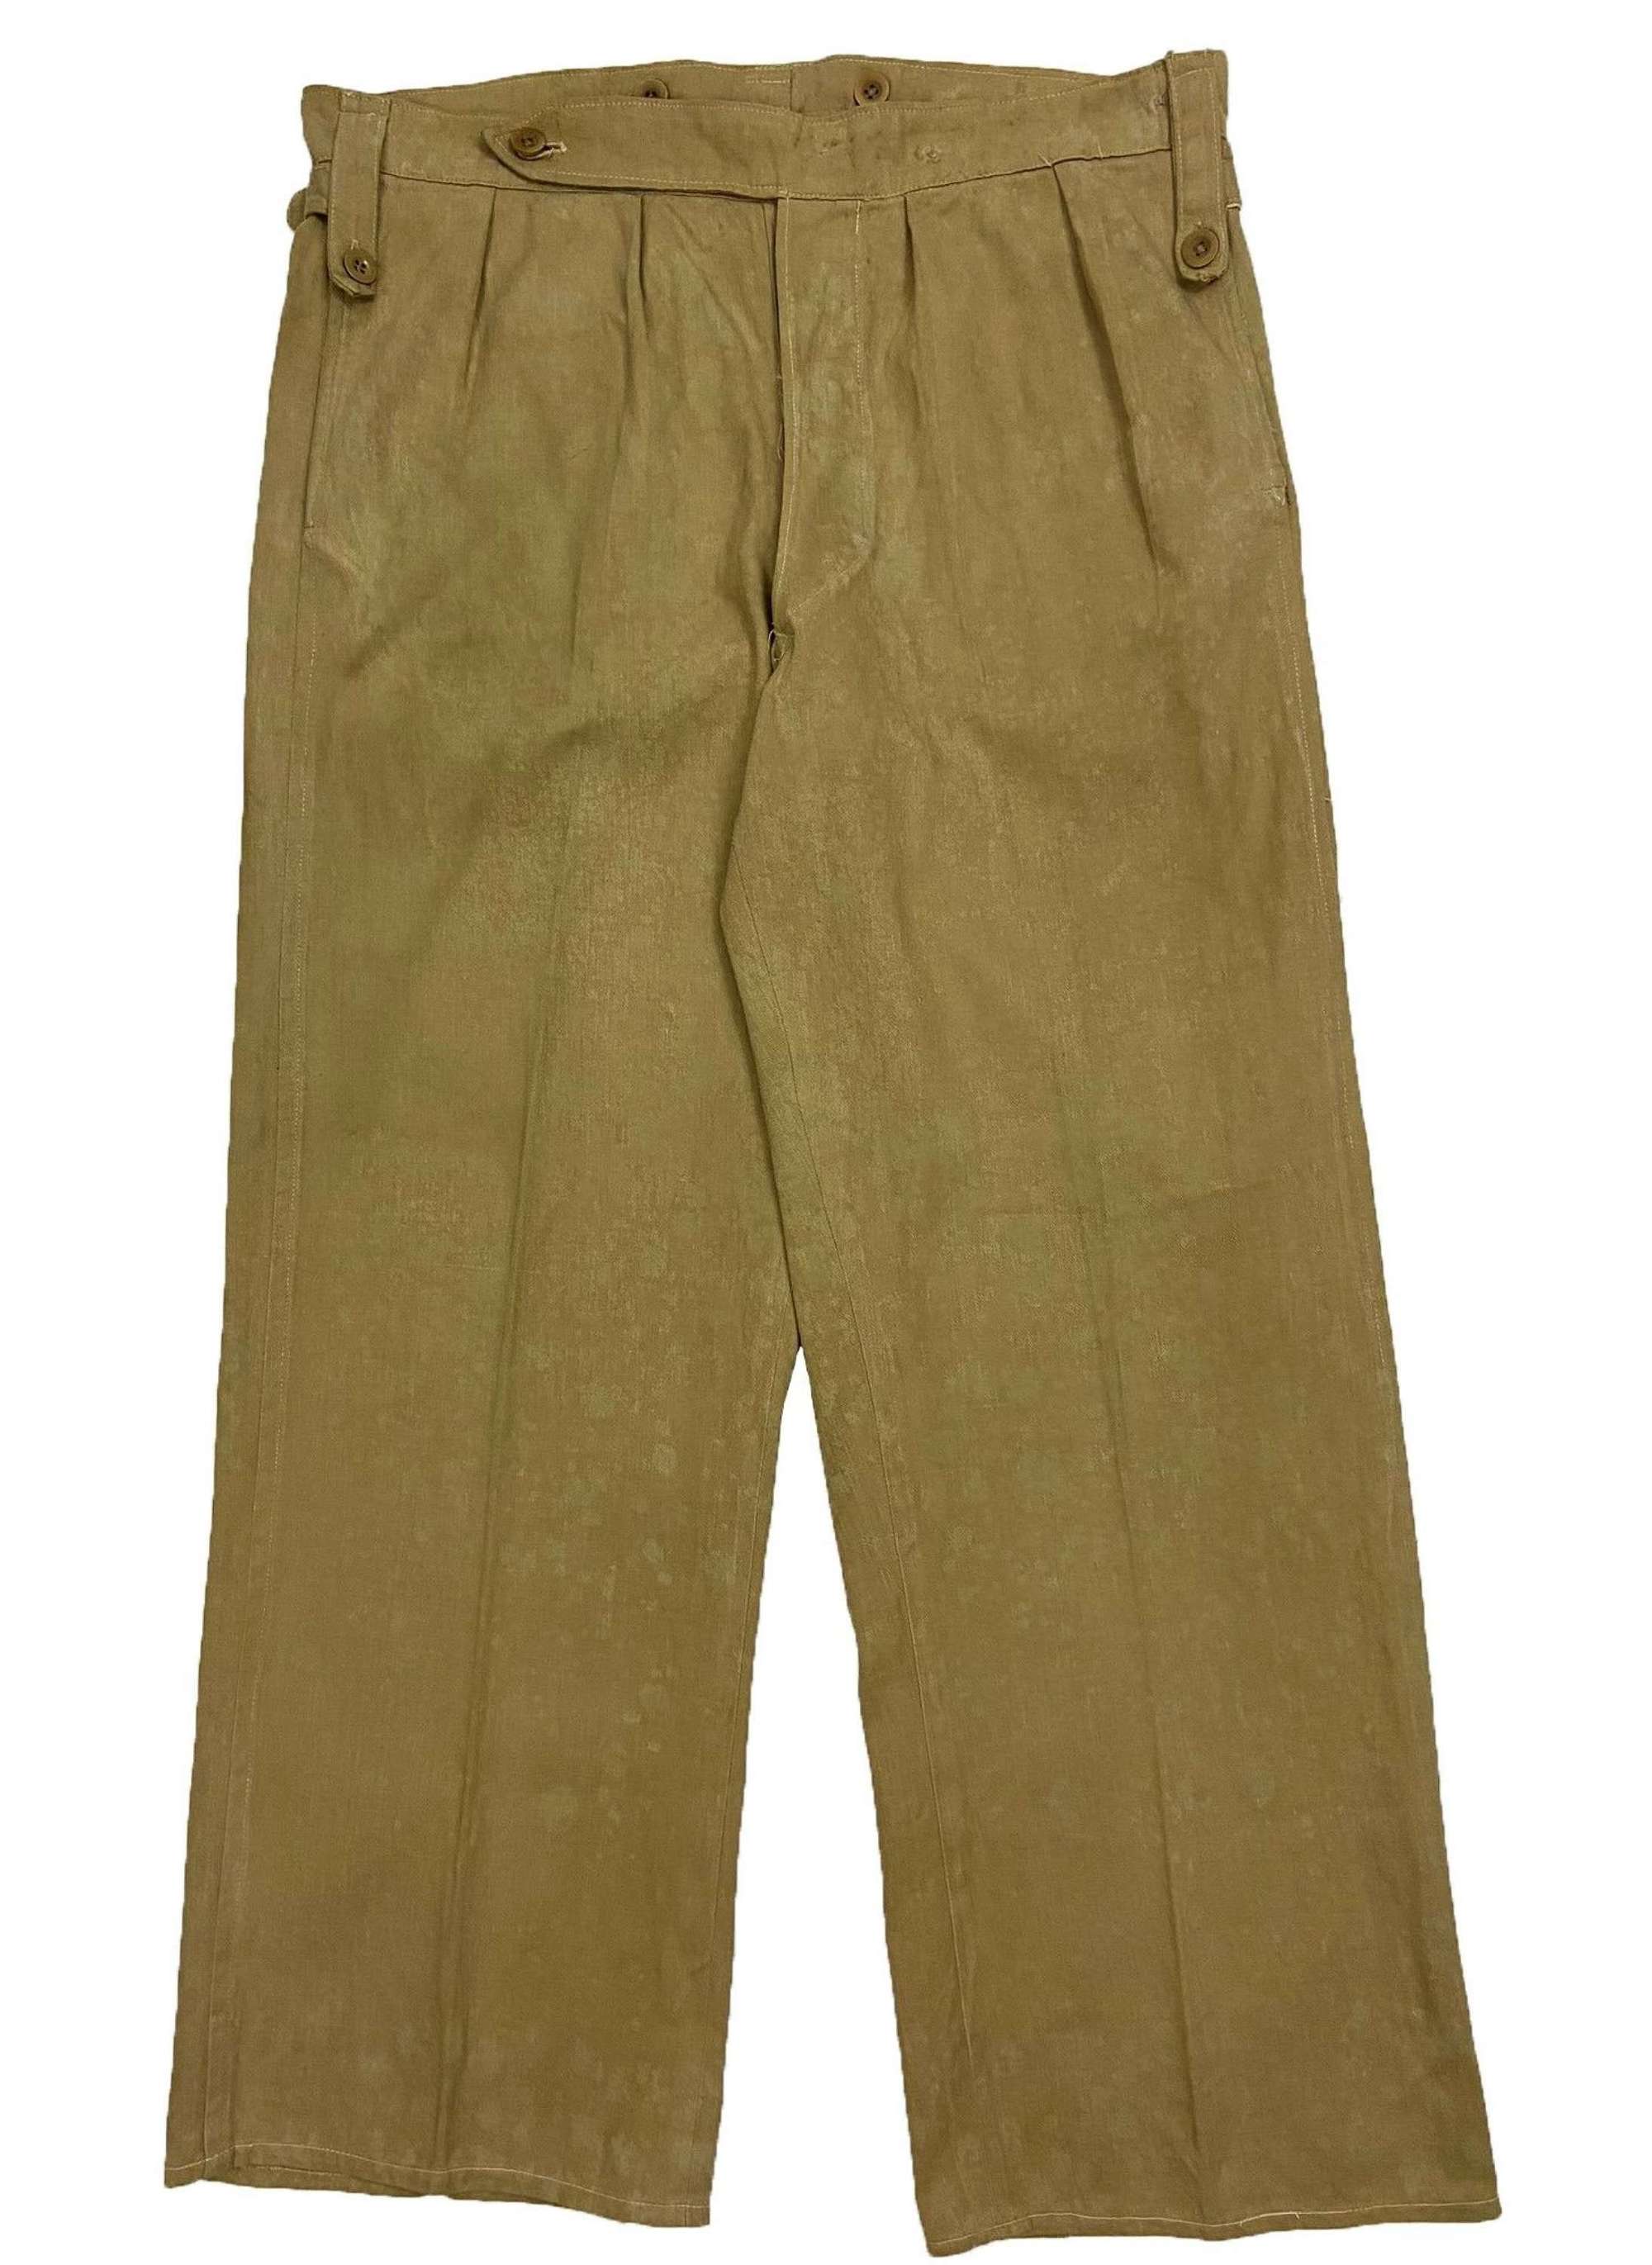 Original 1940s Indian Made Khaki Drill Trousers